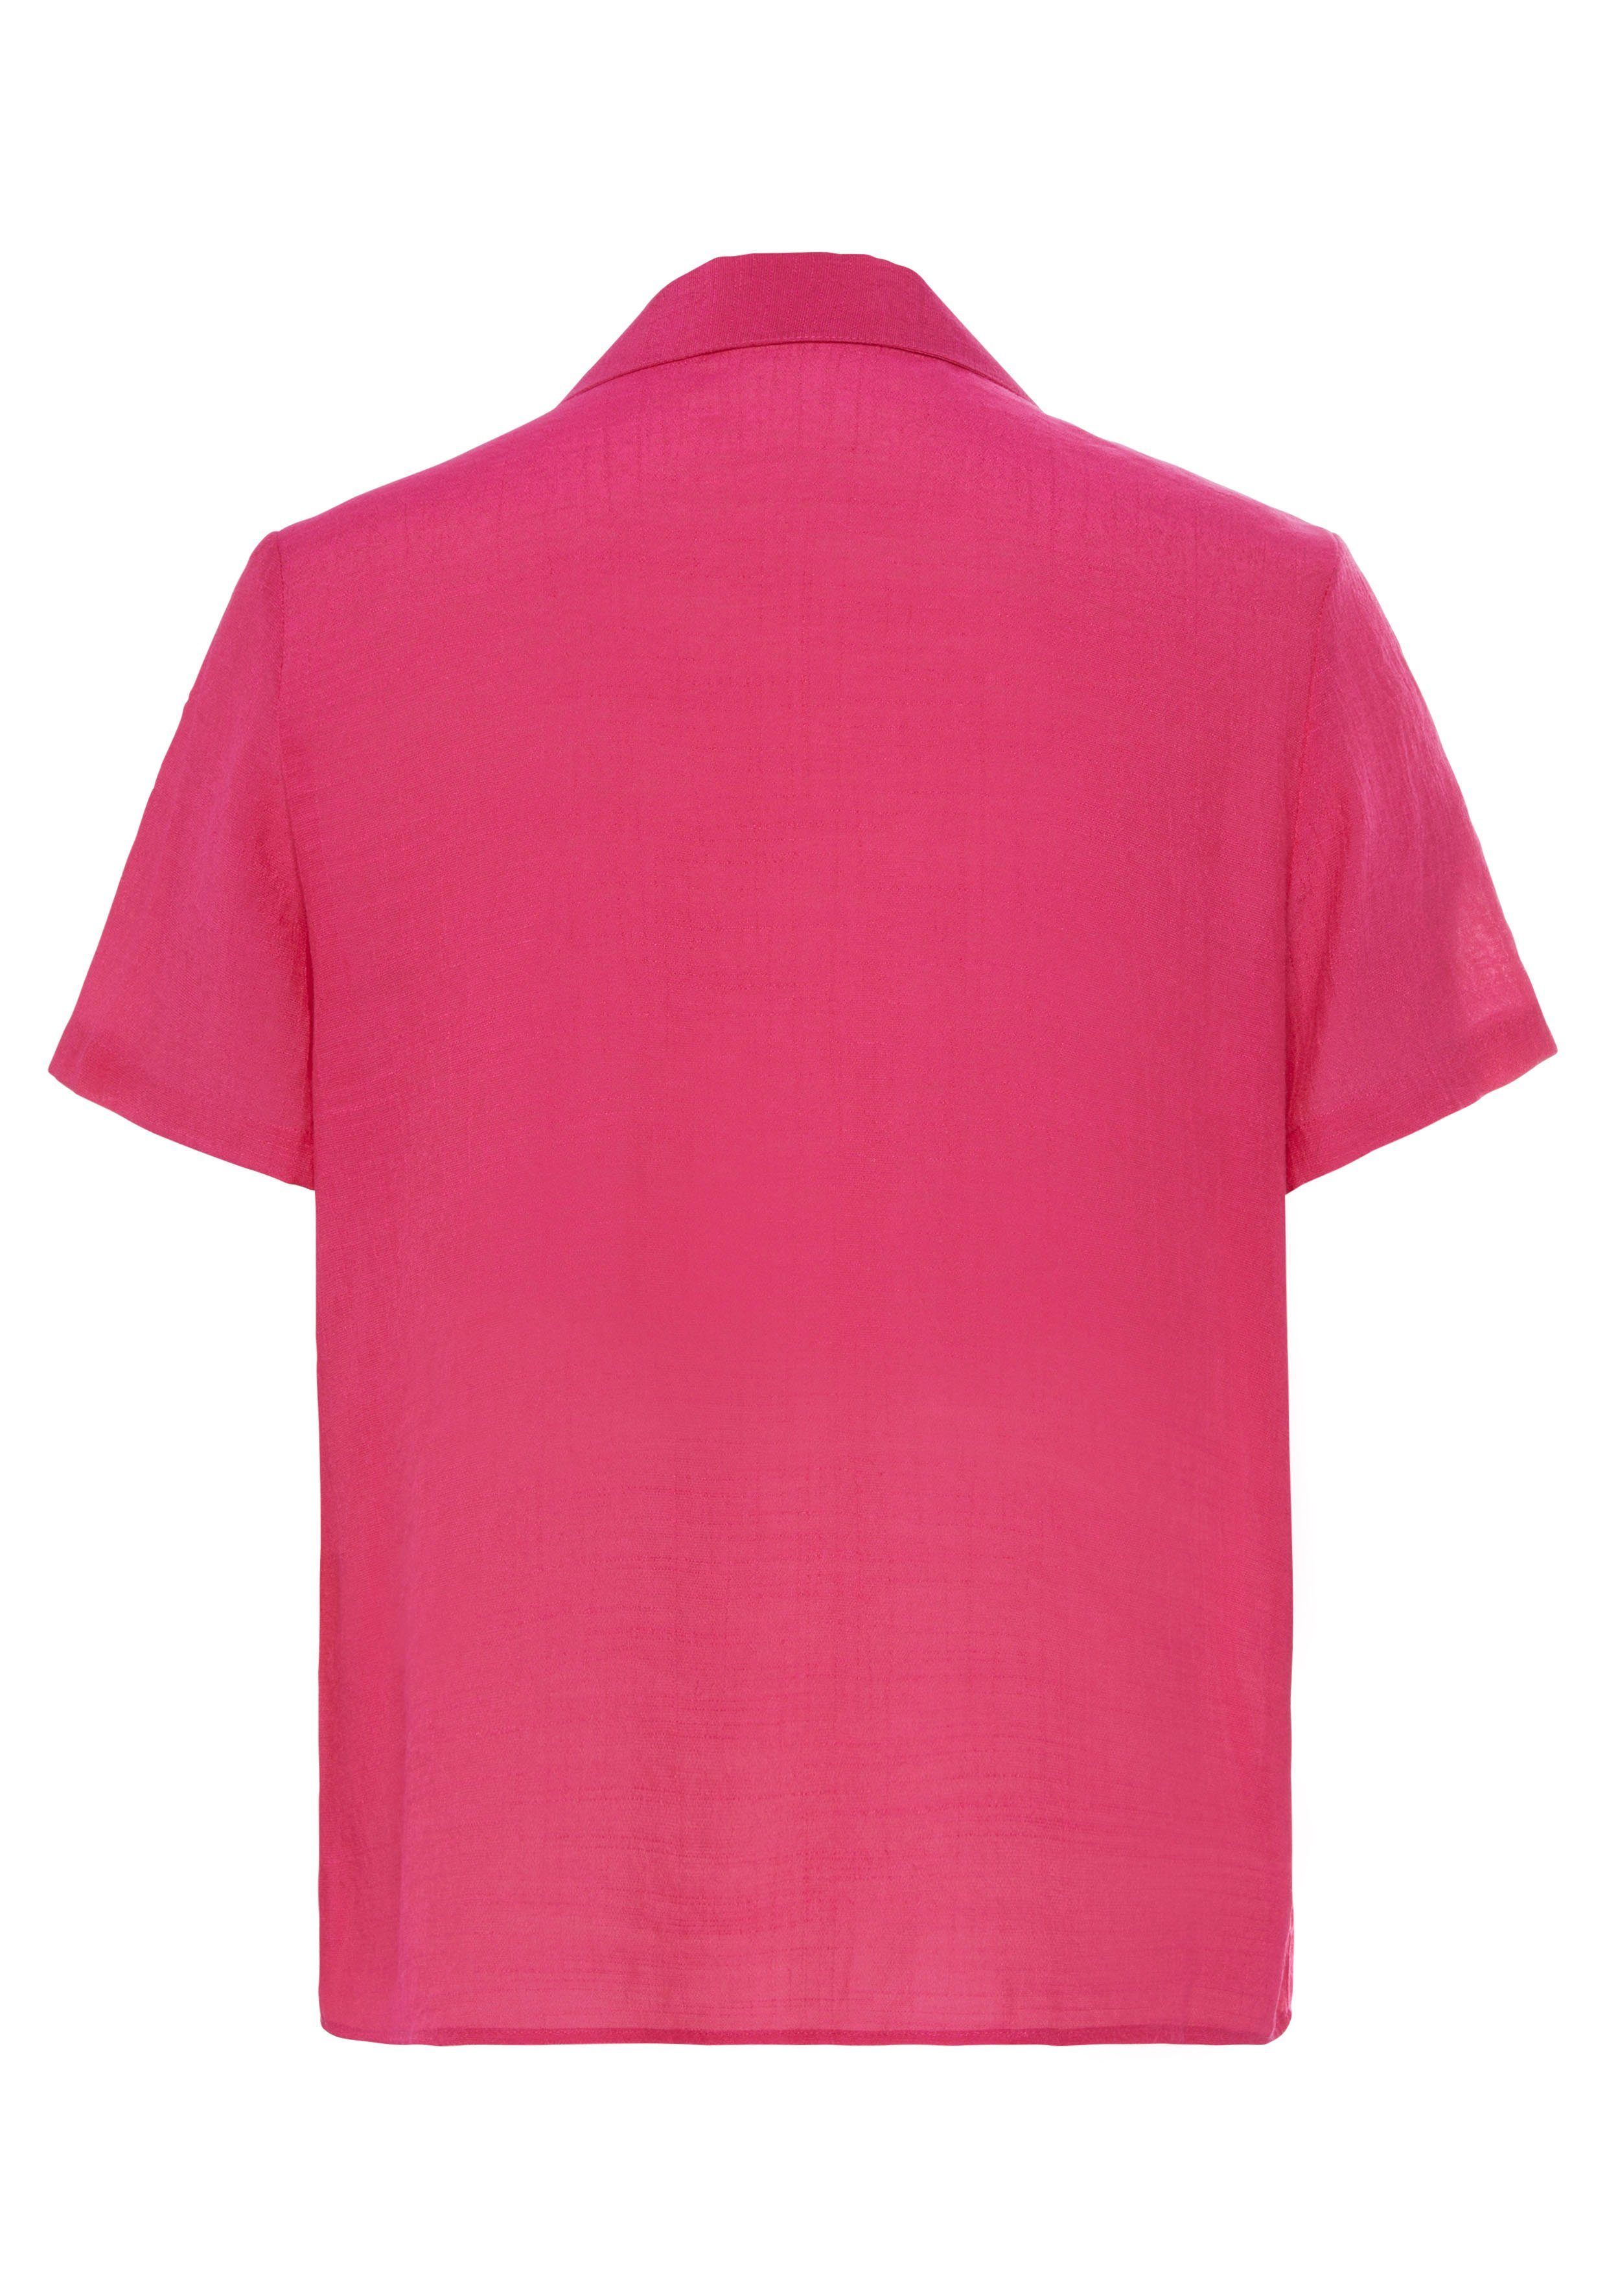 Vivance Kurzarmbluse mit Hemdkragen pink Hemdbluse, Knopfleiste, Strandmode und